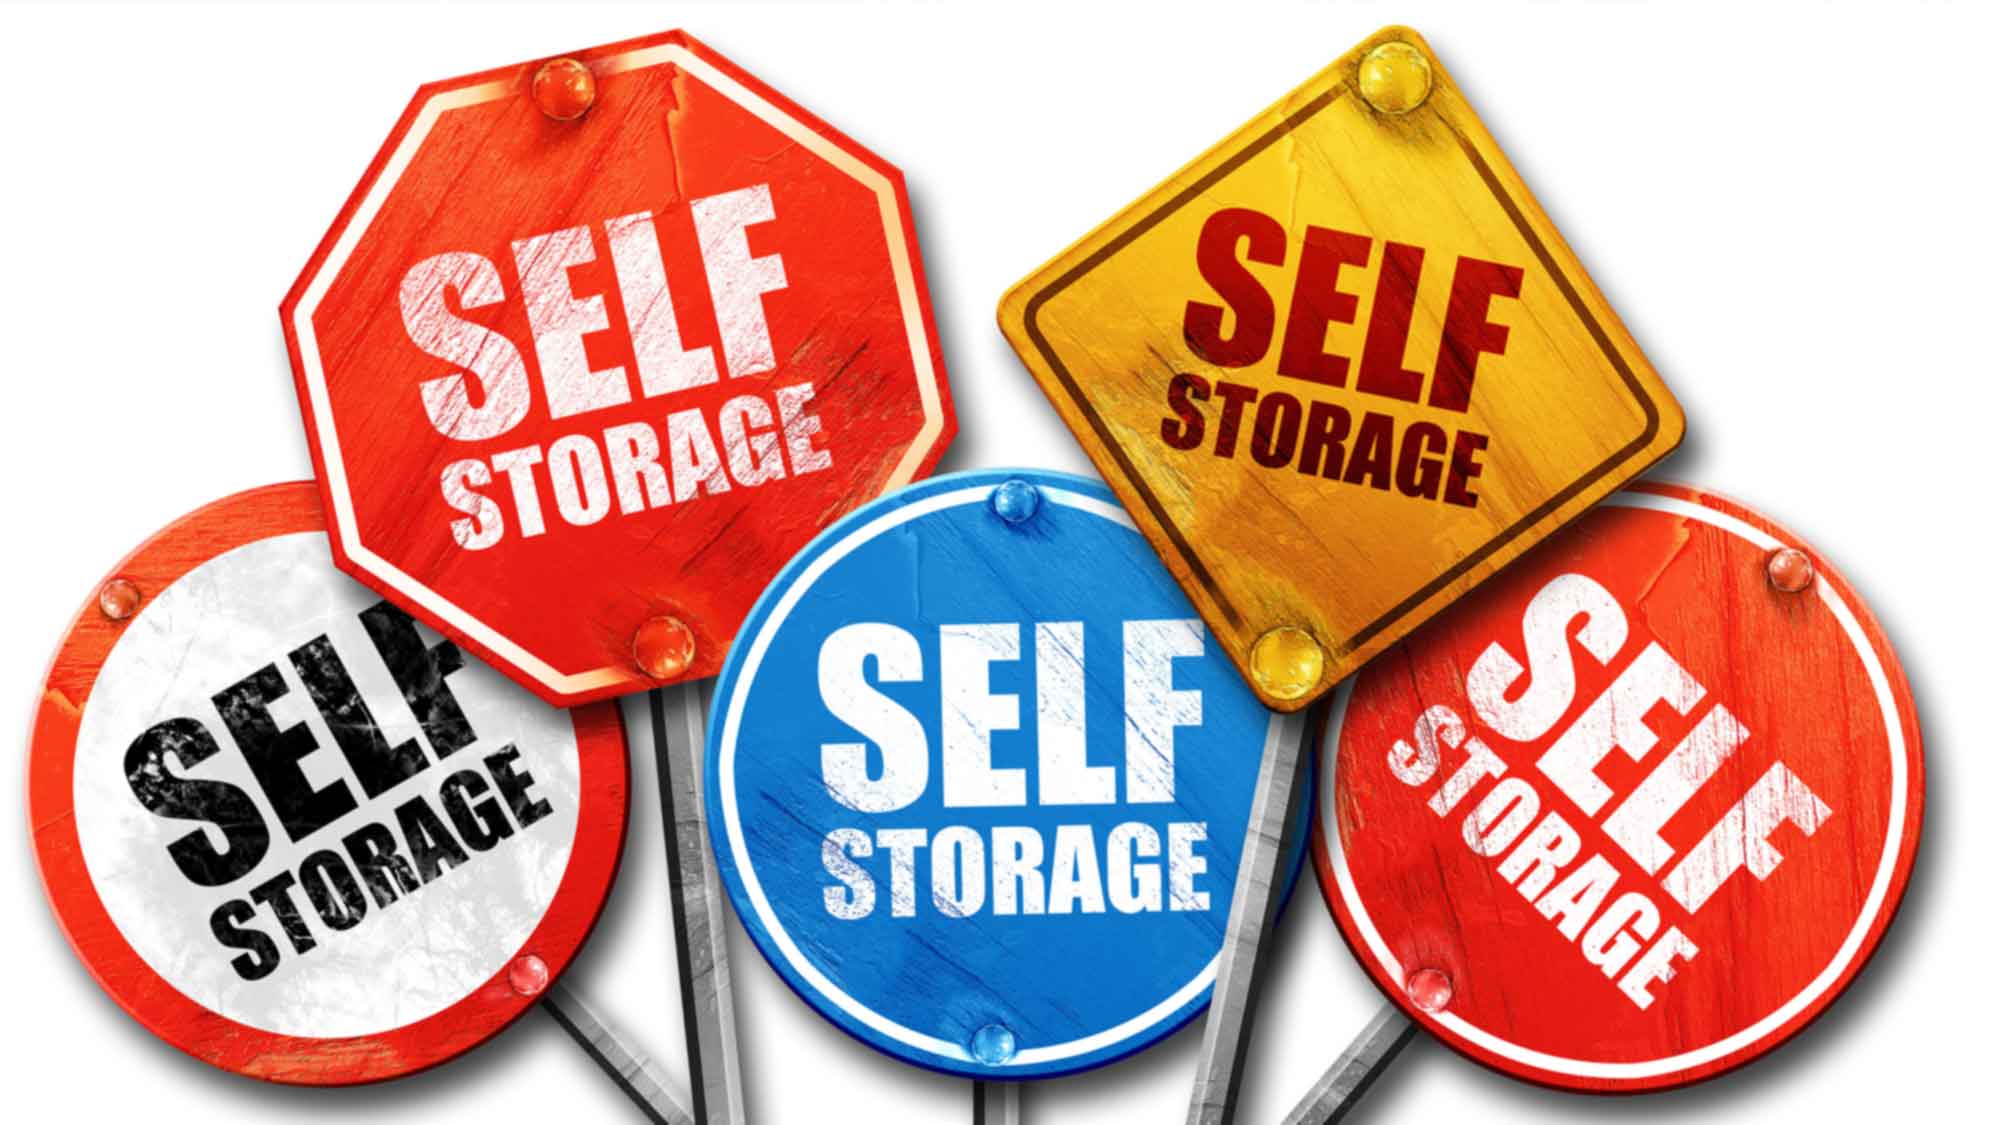 Xtra Stor Allegan Self Storage